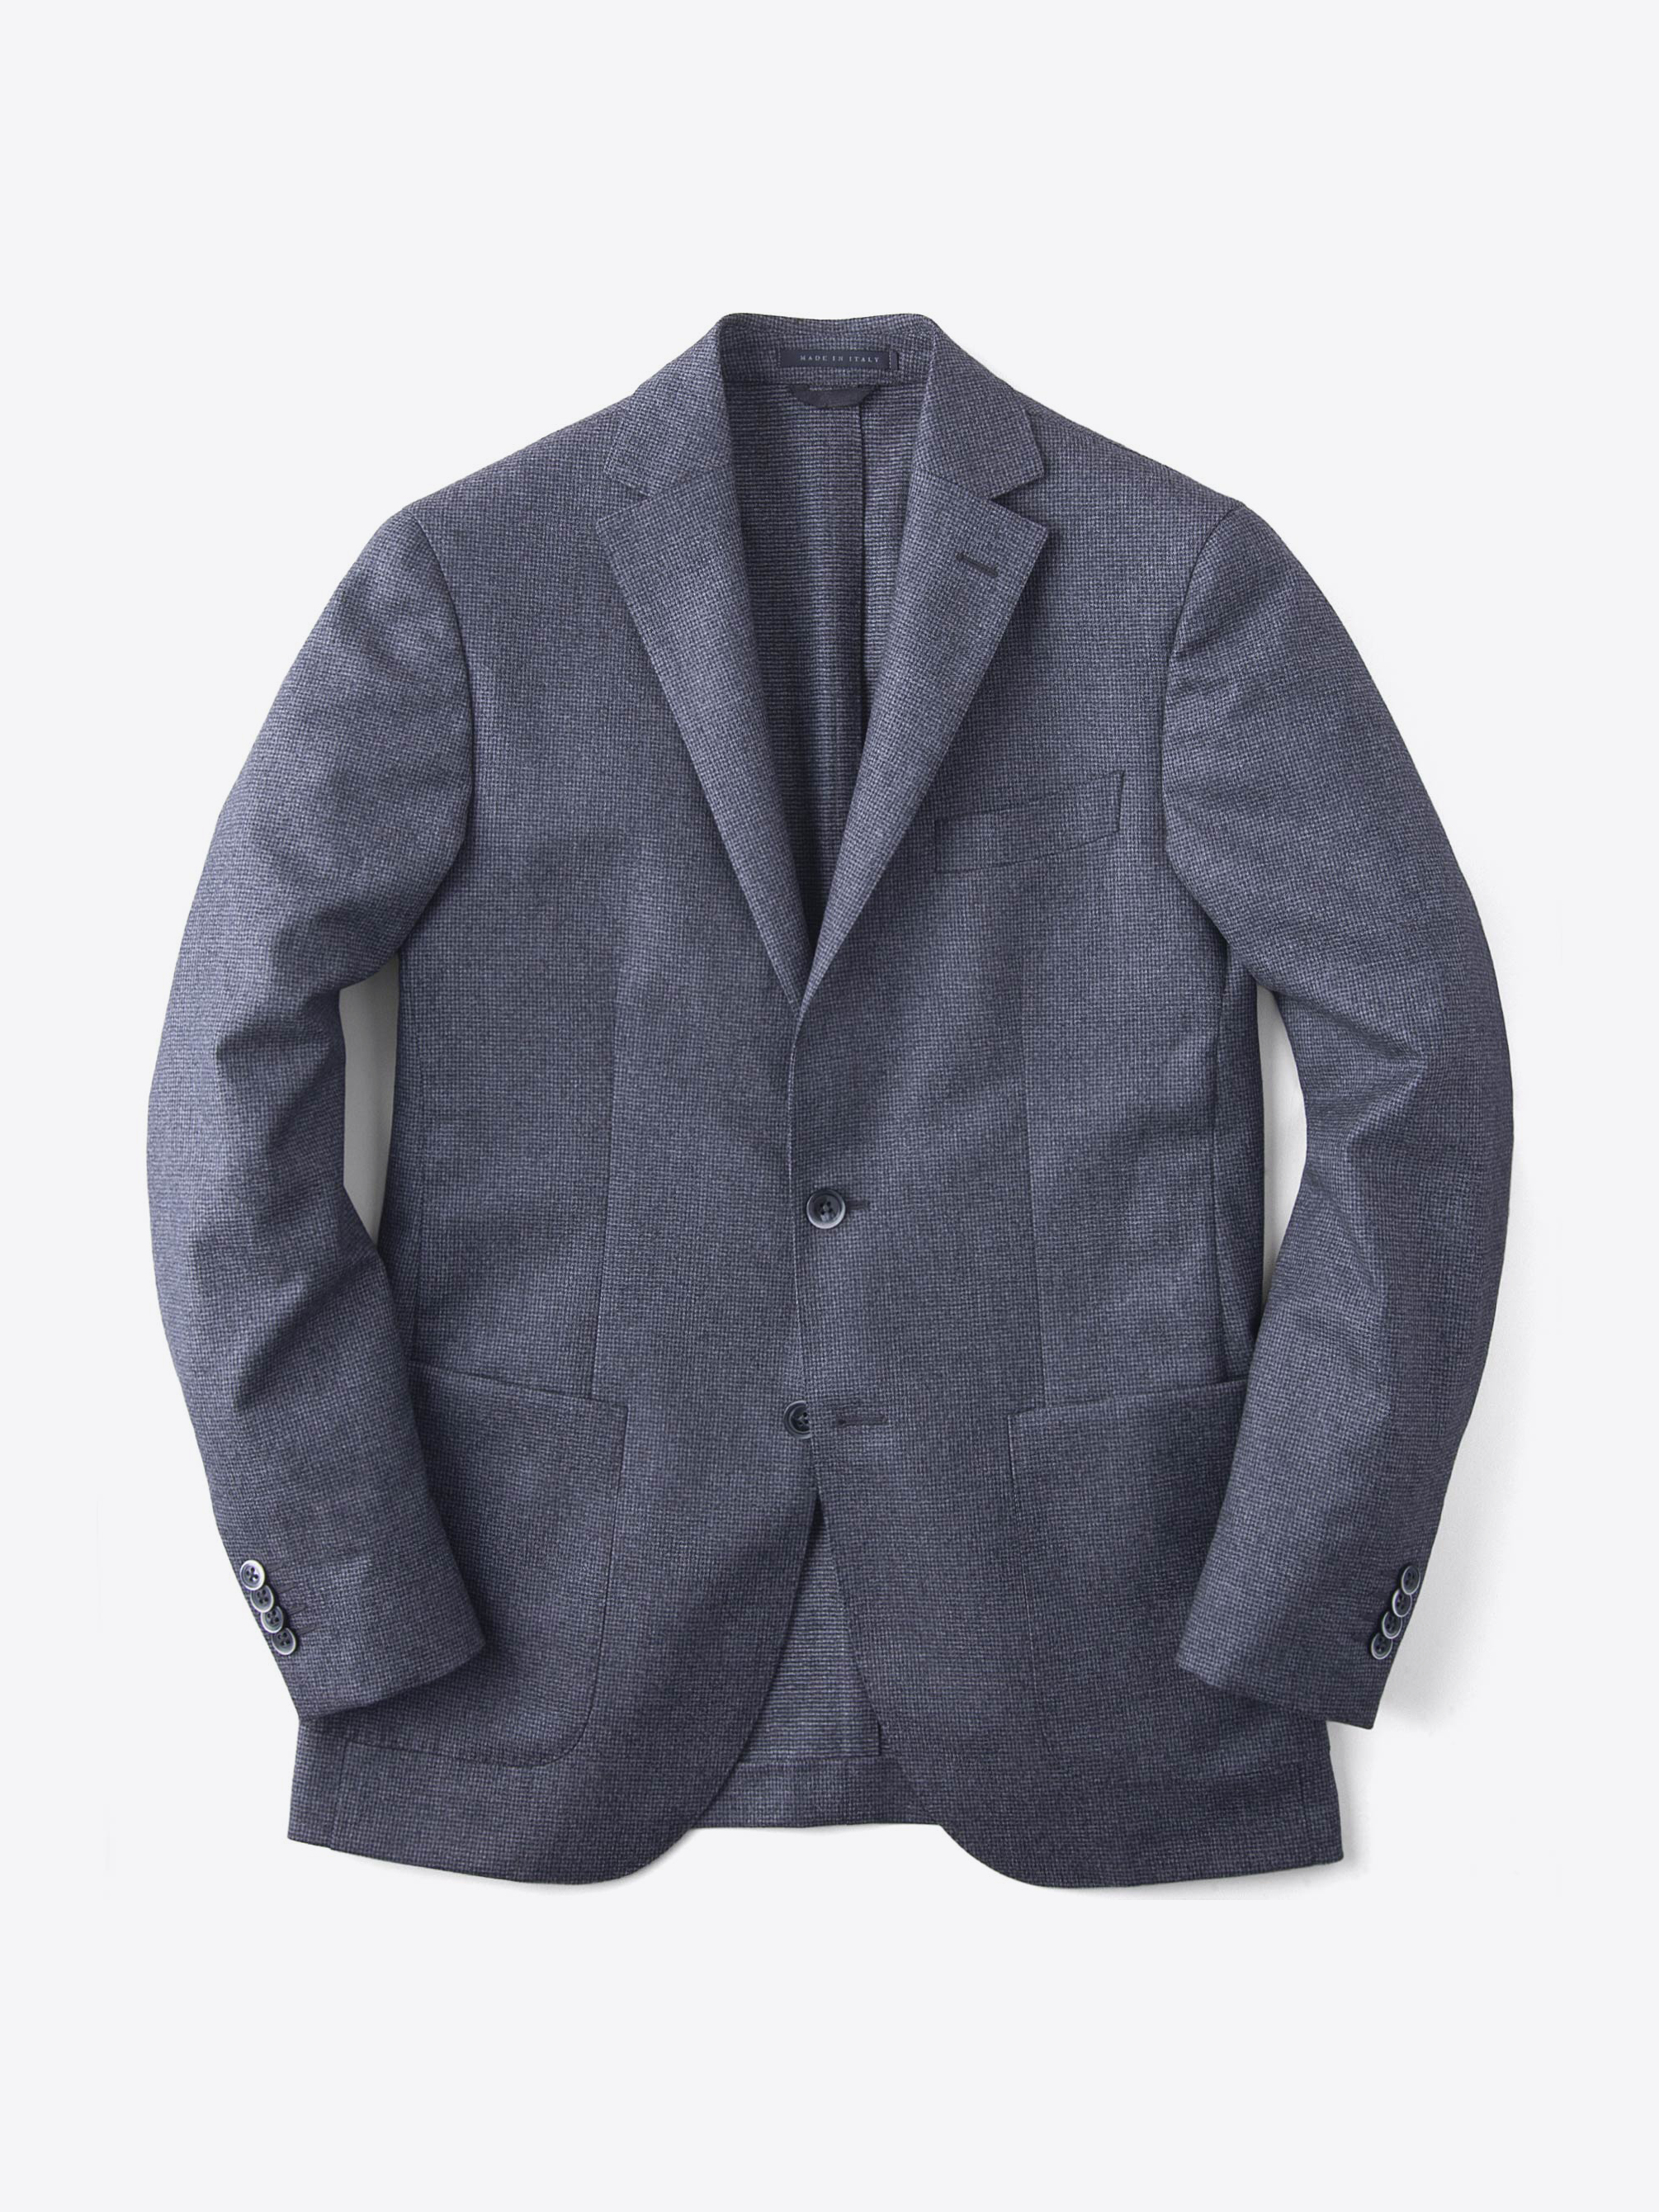 Zoom Image of Grey Houndstooth Genova Jacket